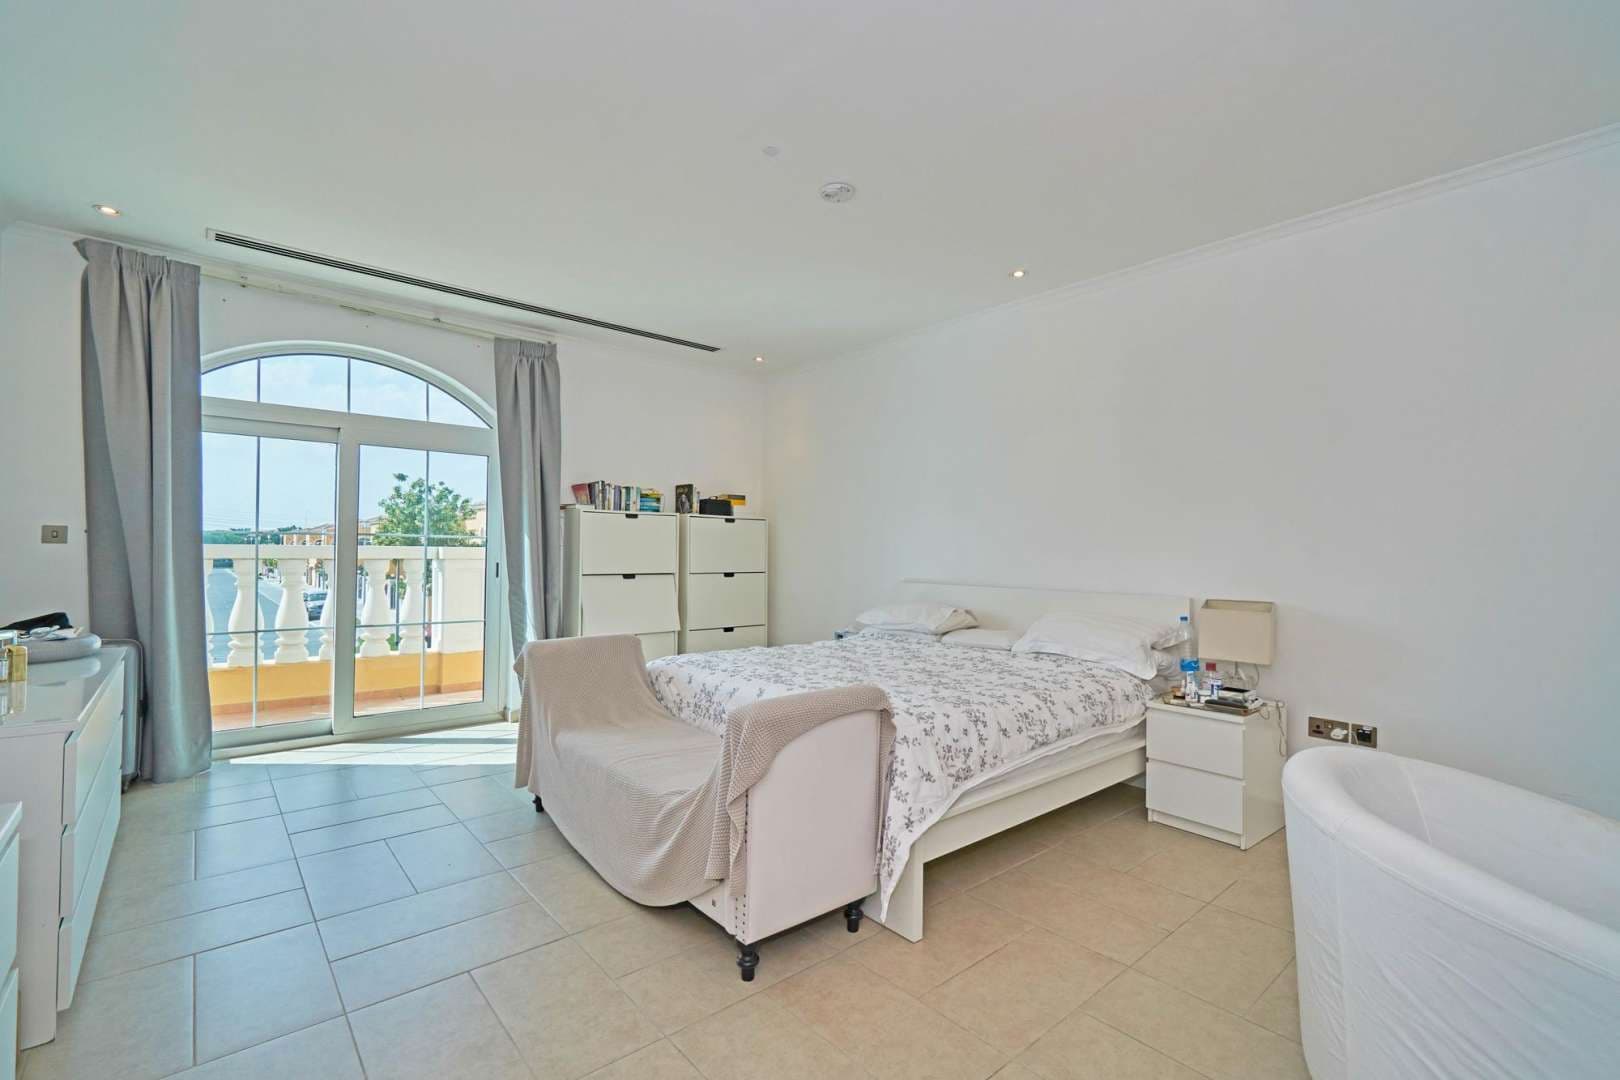 5 Bedroom Villa For Rent Legacy Lp06459 1082b8720b99f800.jpg